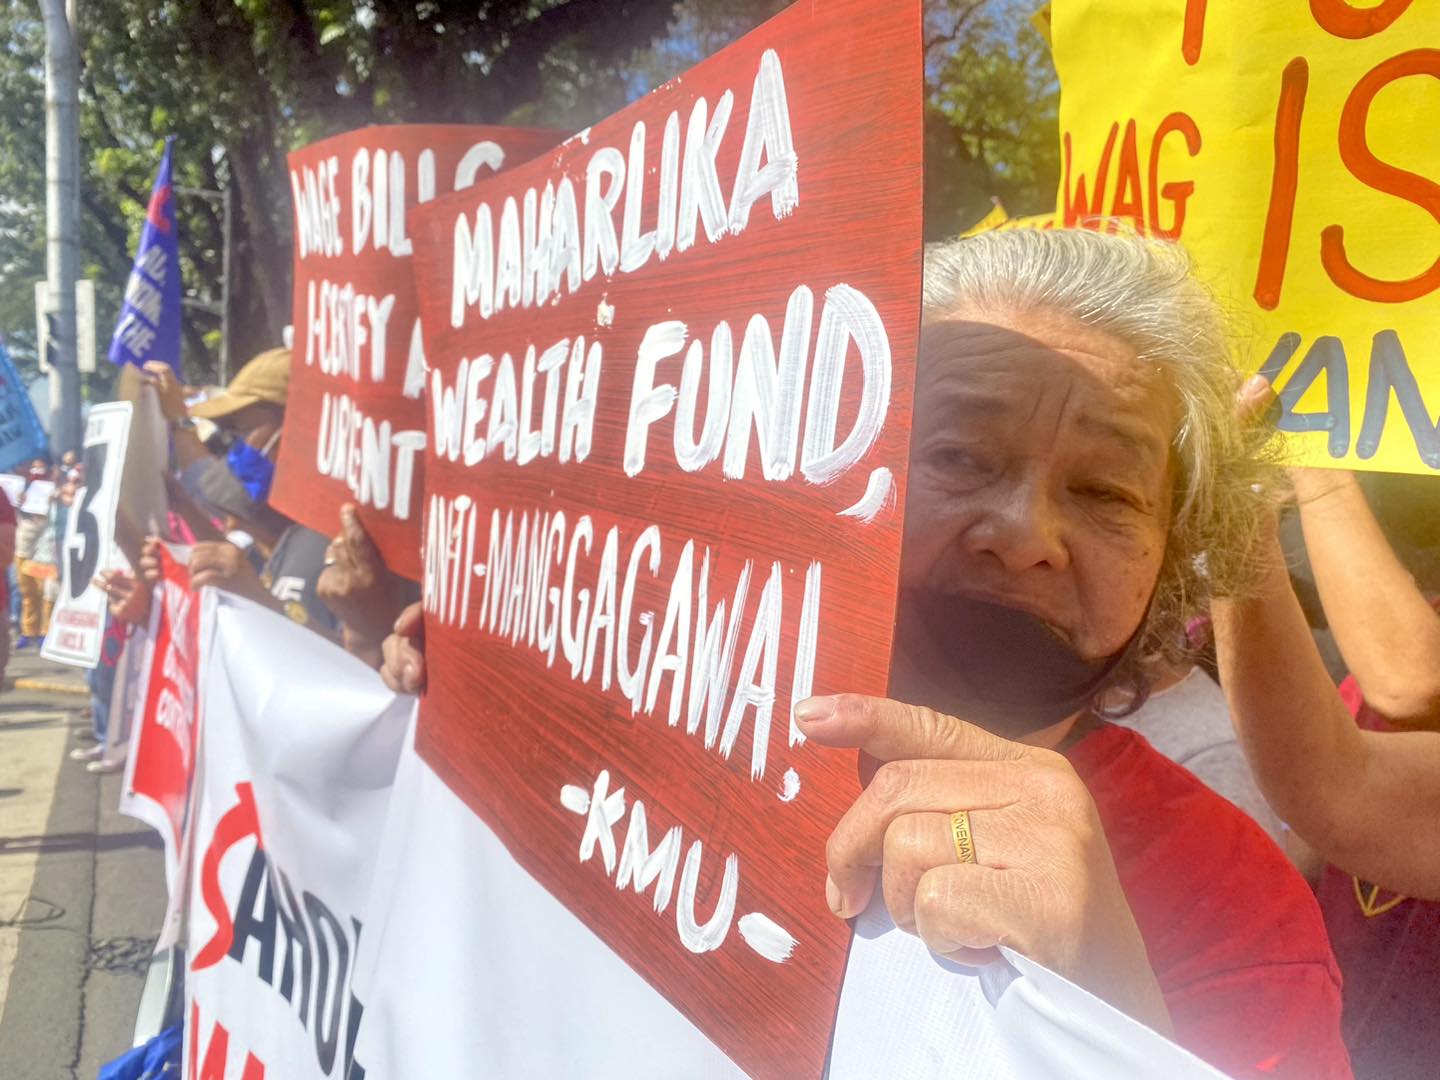 Progressives say 'Maharlika Wealth Fund' dubious, prone to corruption -  Bulatlat